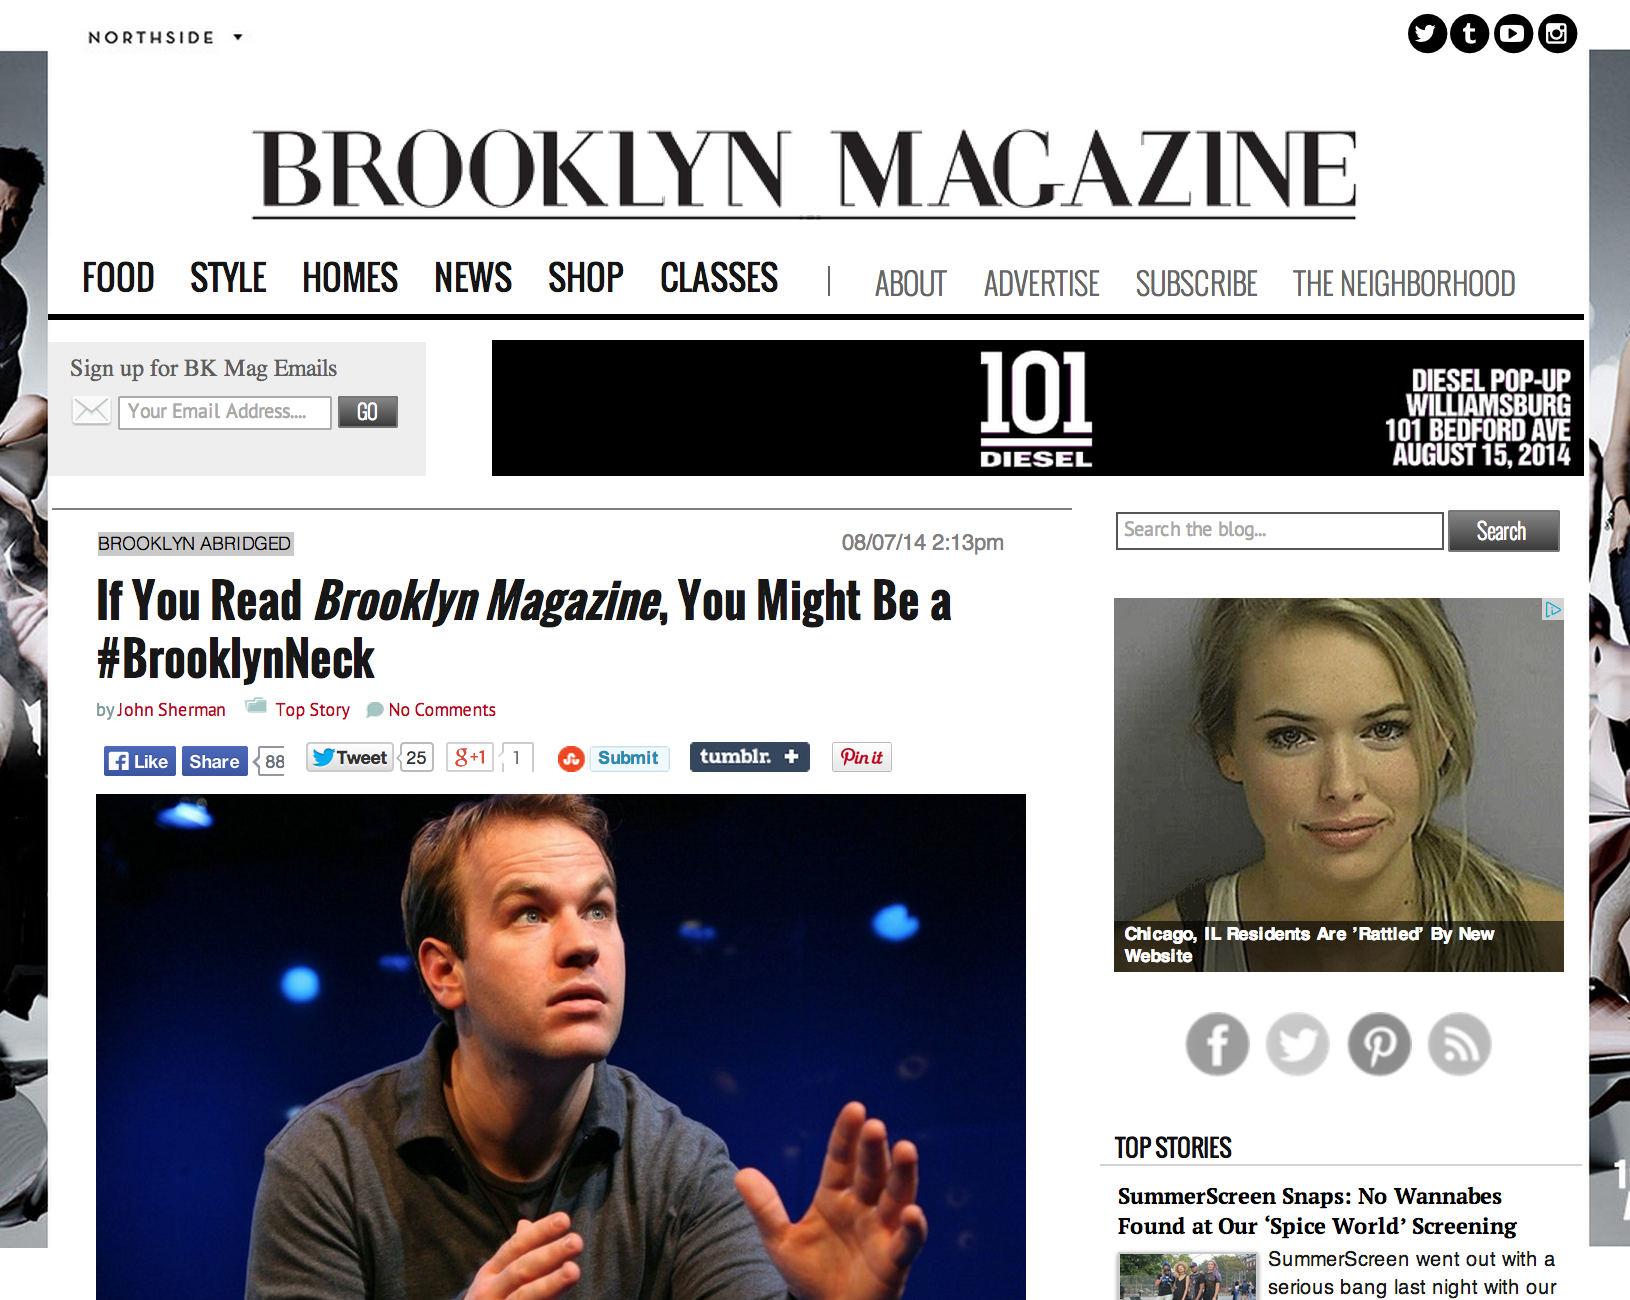 Brooklyn Magazine covers #BrooklynNeck